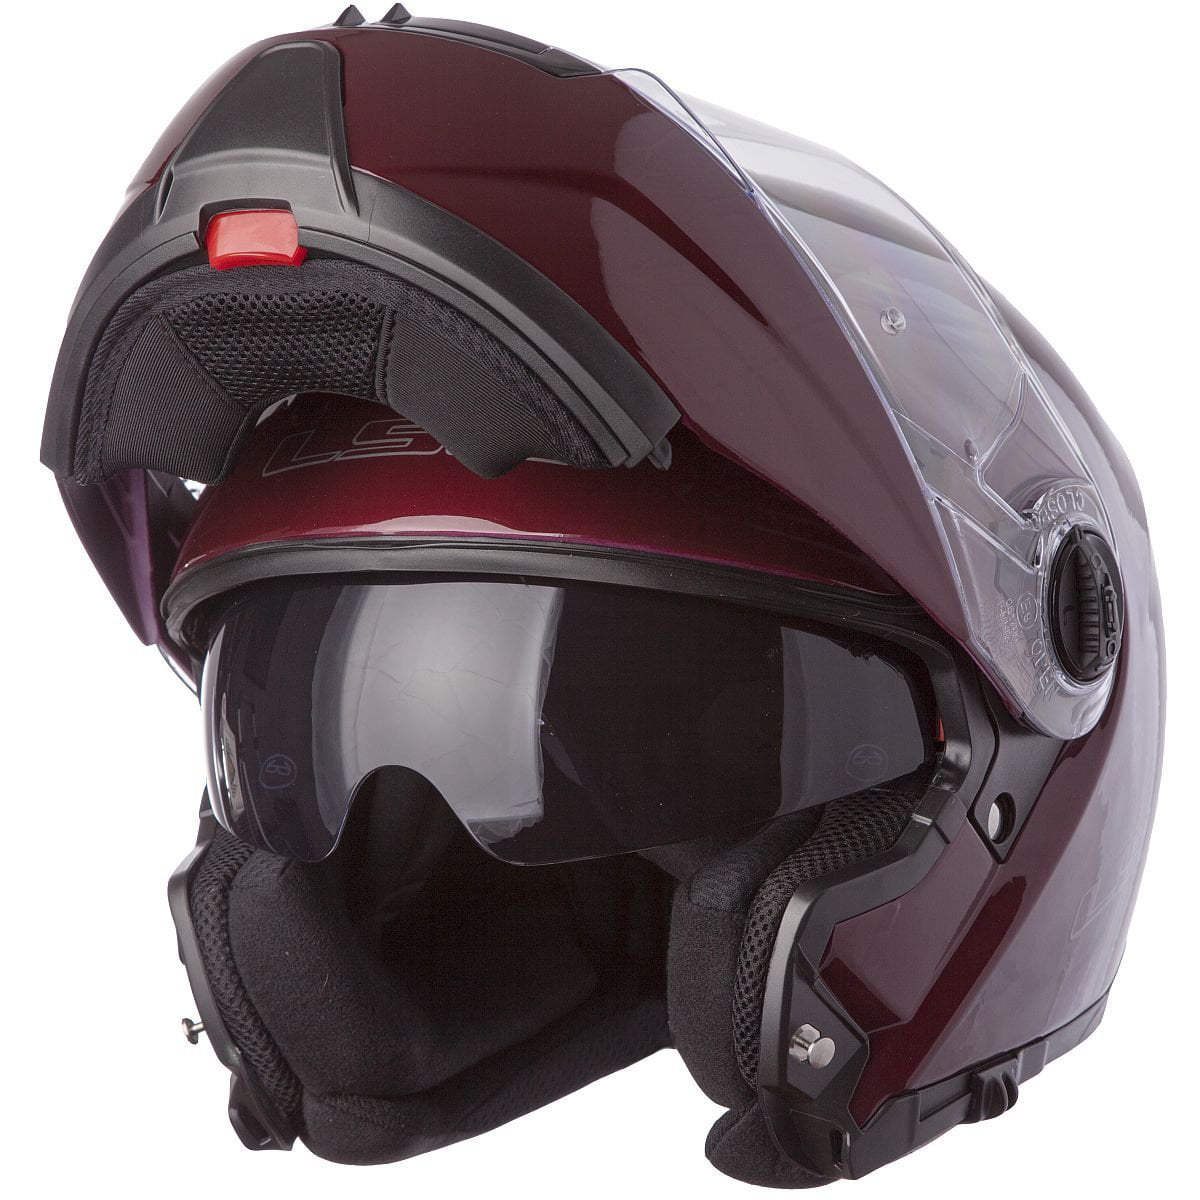 LS2 Helmets Strobe Solid Modular Motorcycle Helmet with sunshield (Wineberry, Small) - Walmart.com